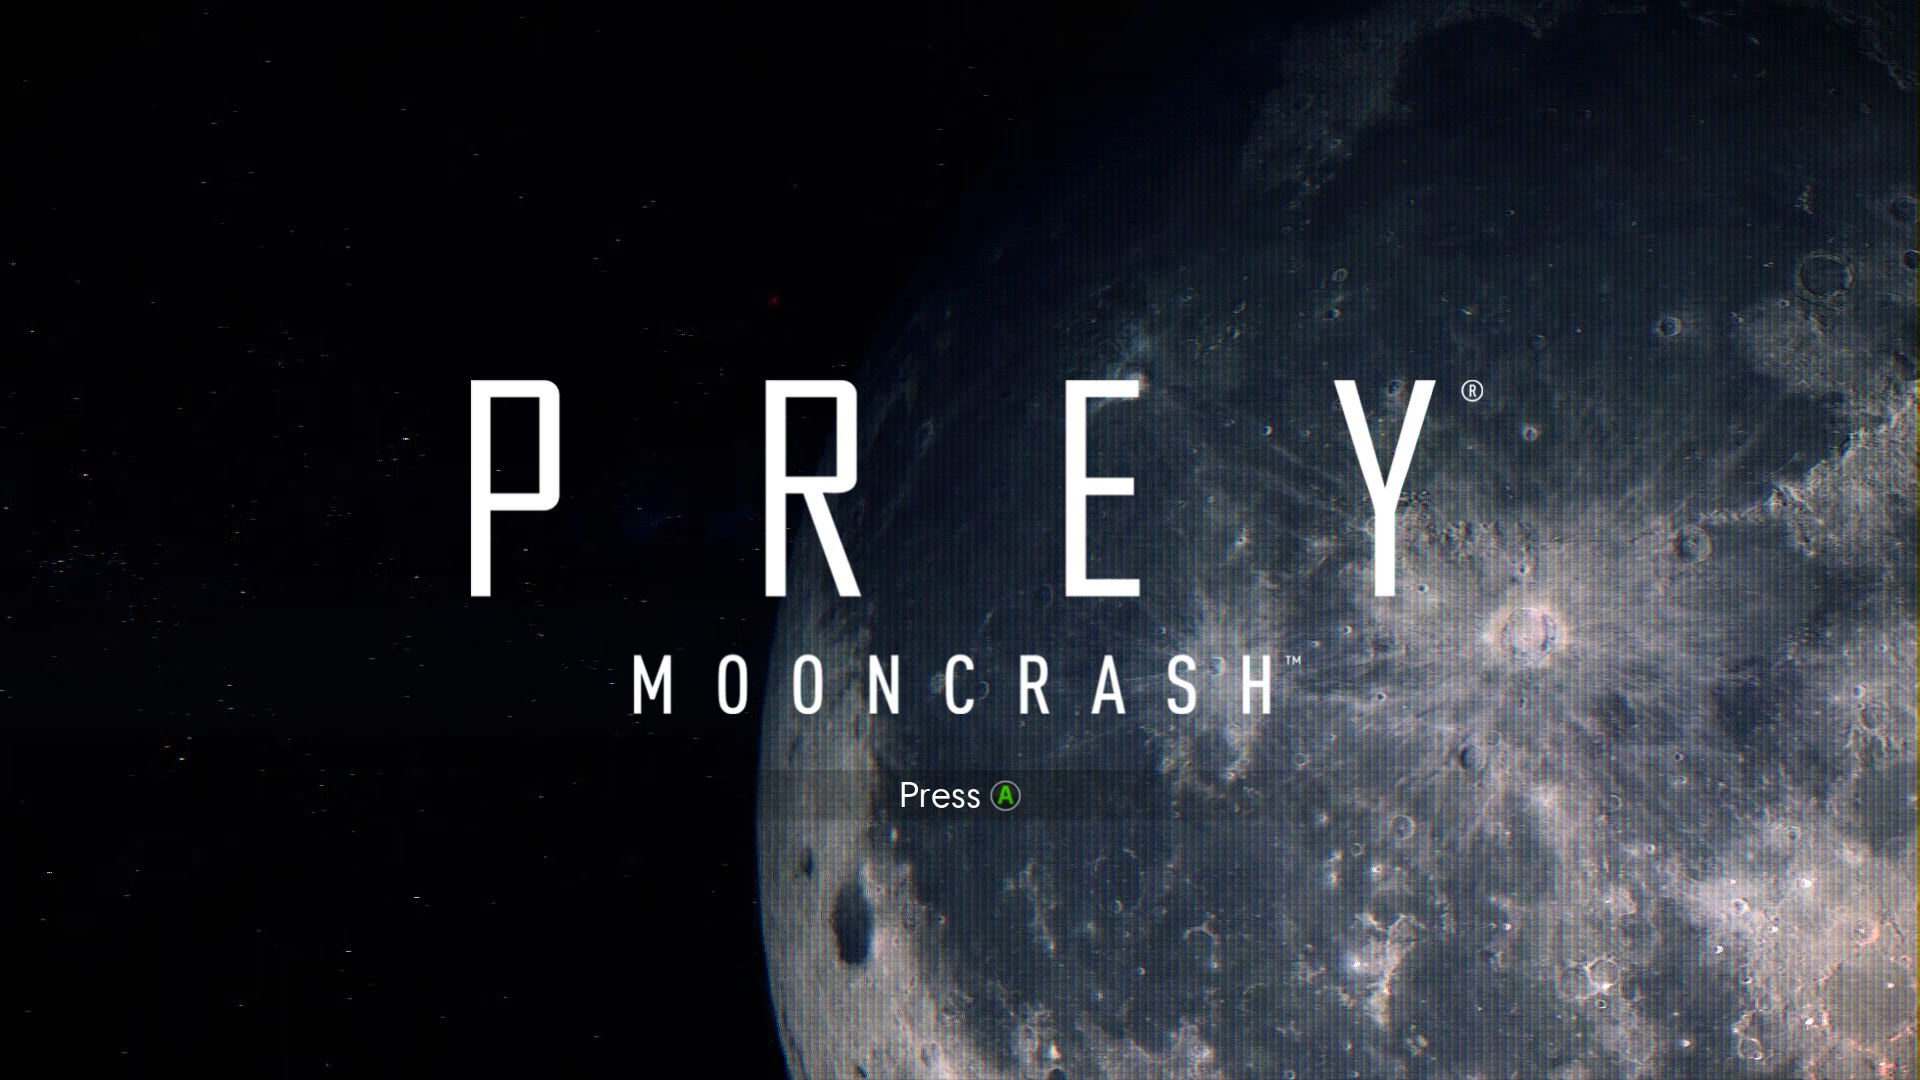 epic prey mooncrash